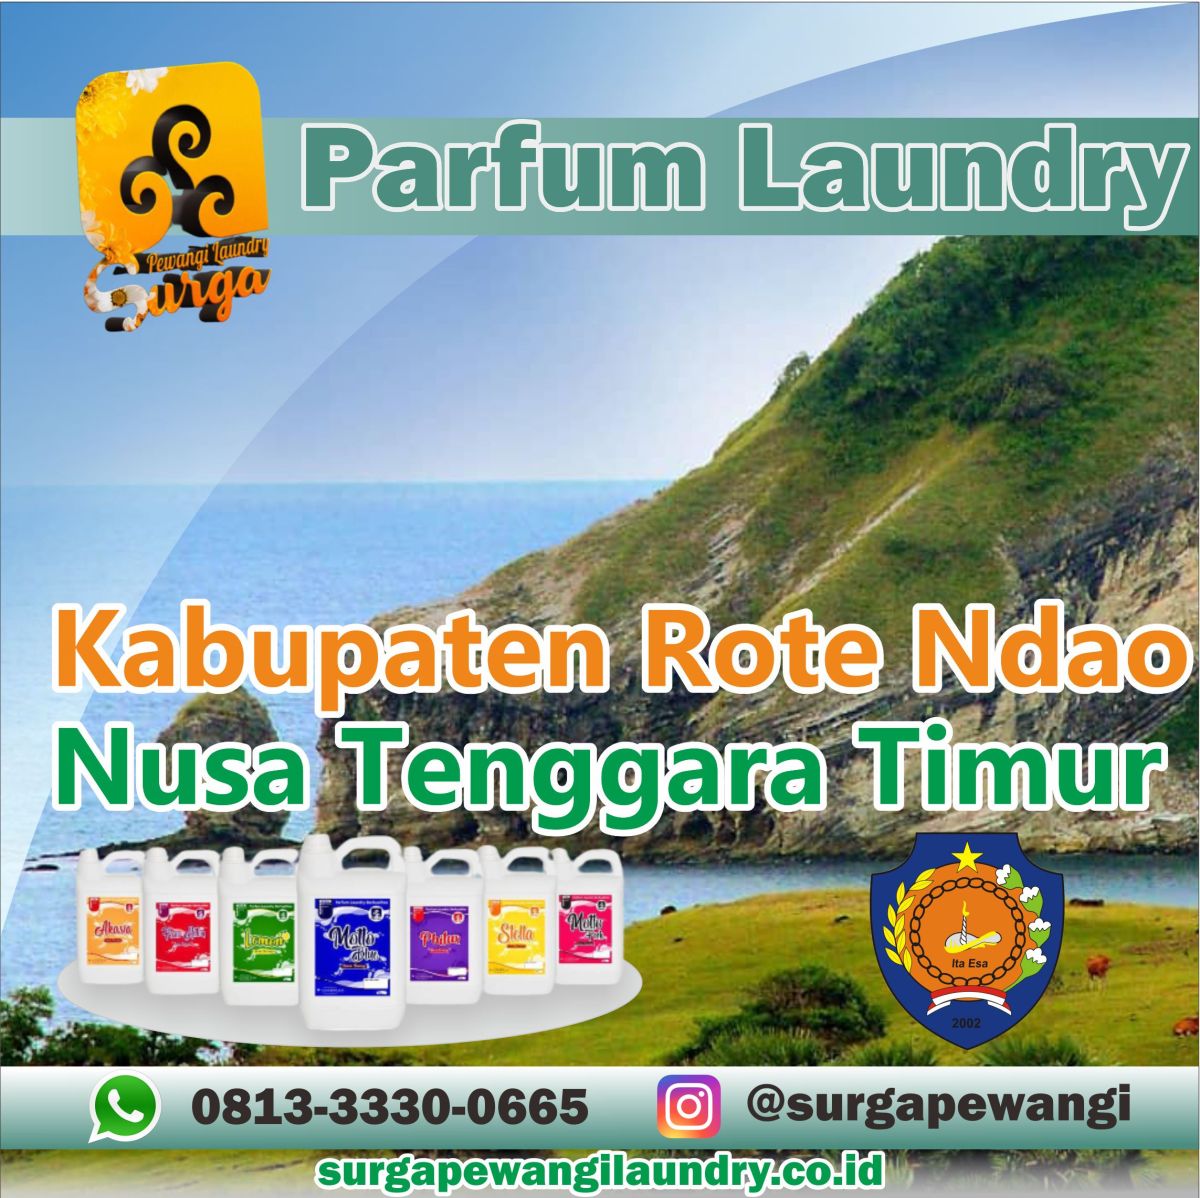 Parfum Laundry Kabupaten Rote Ndao, Nusa Tenggara Timur